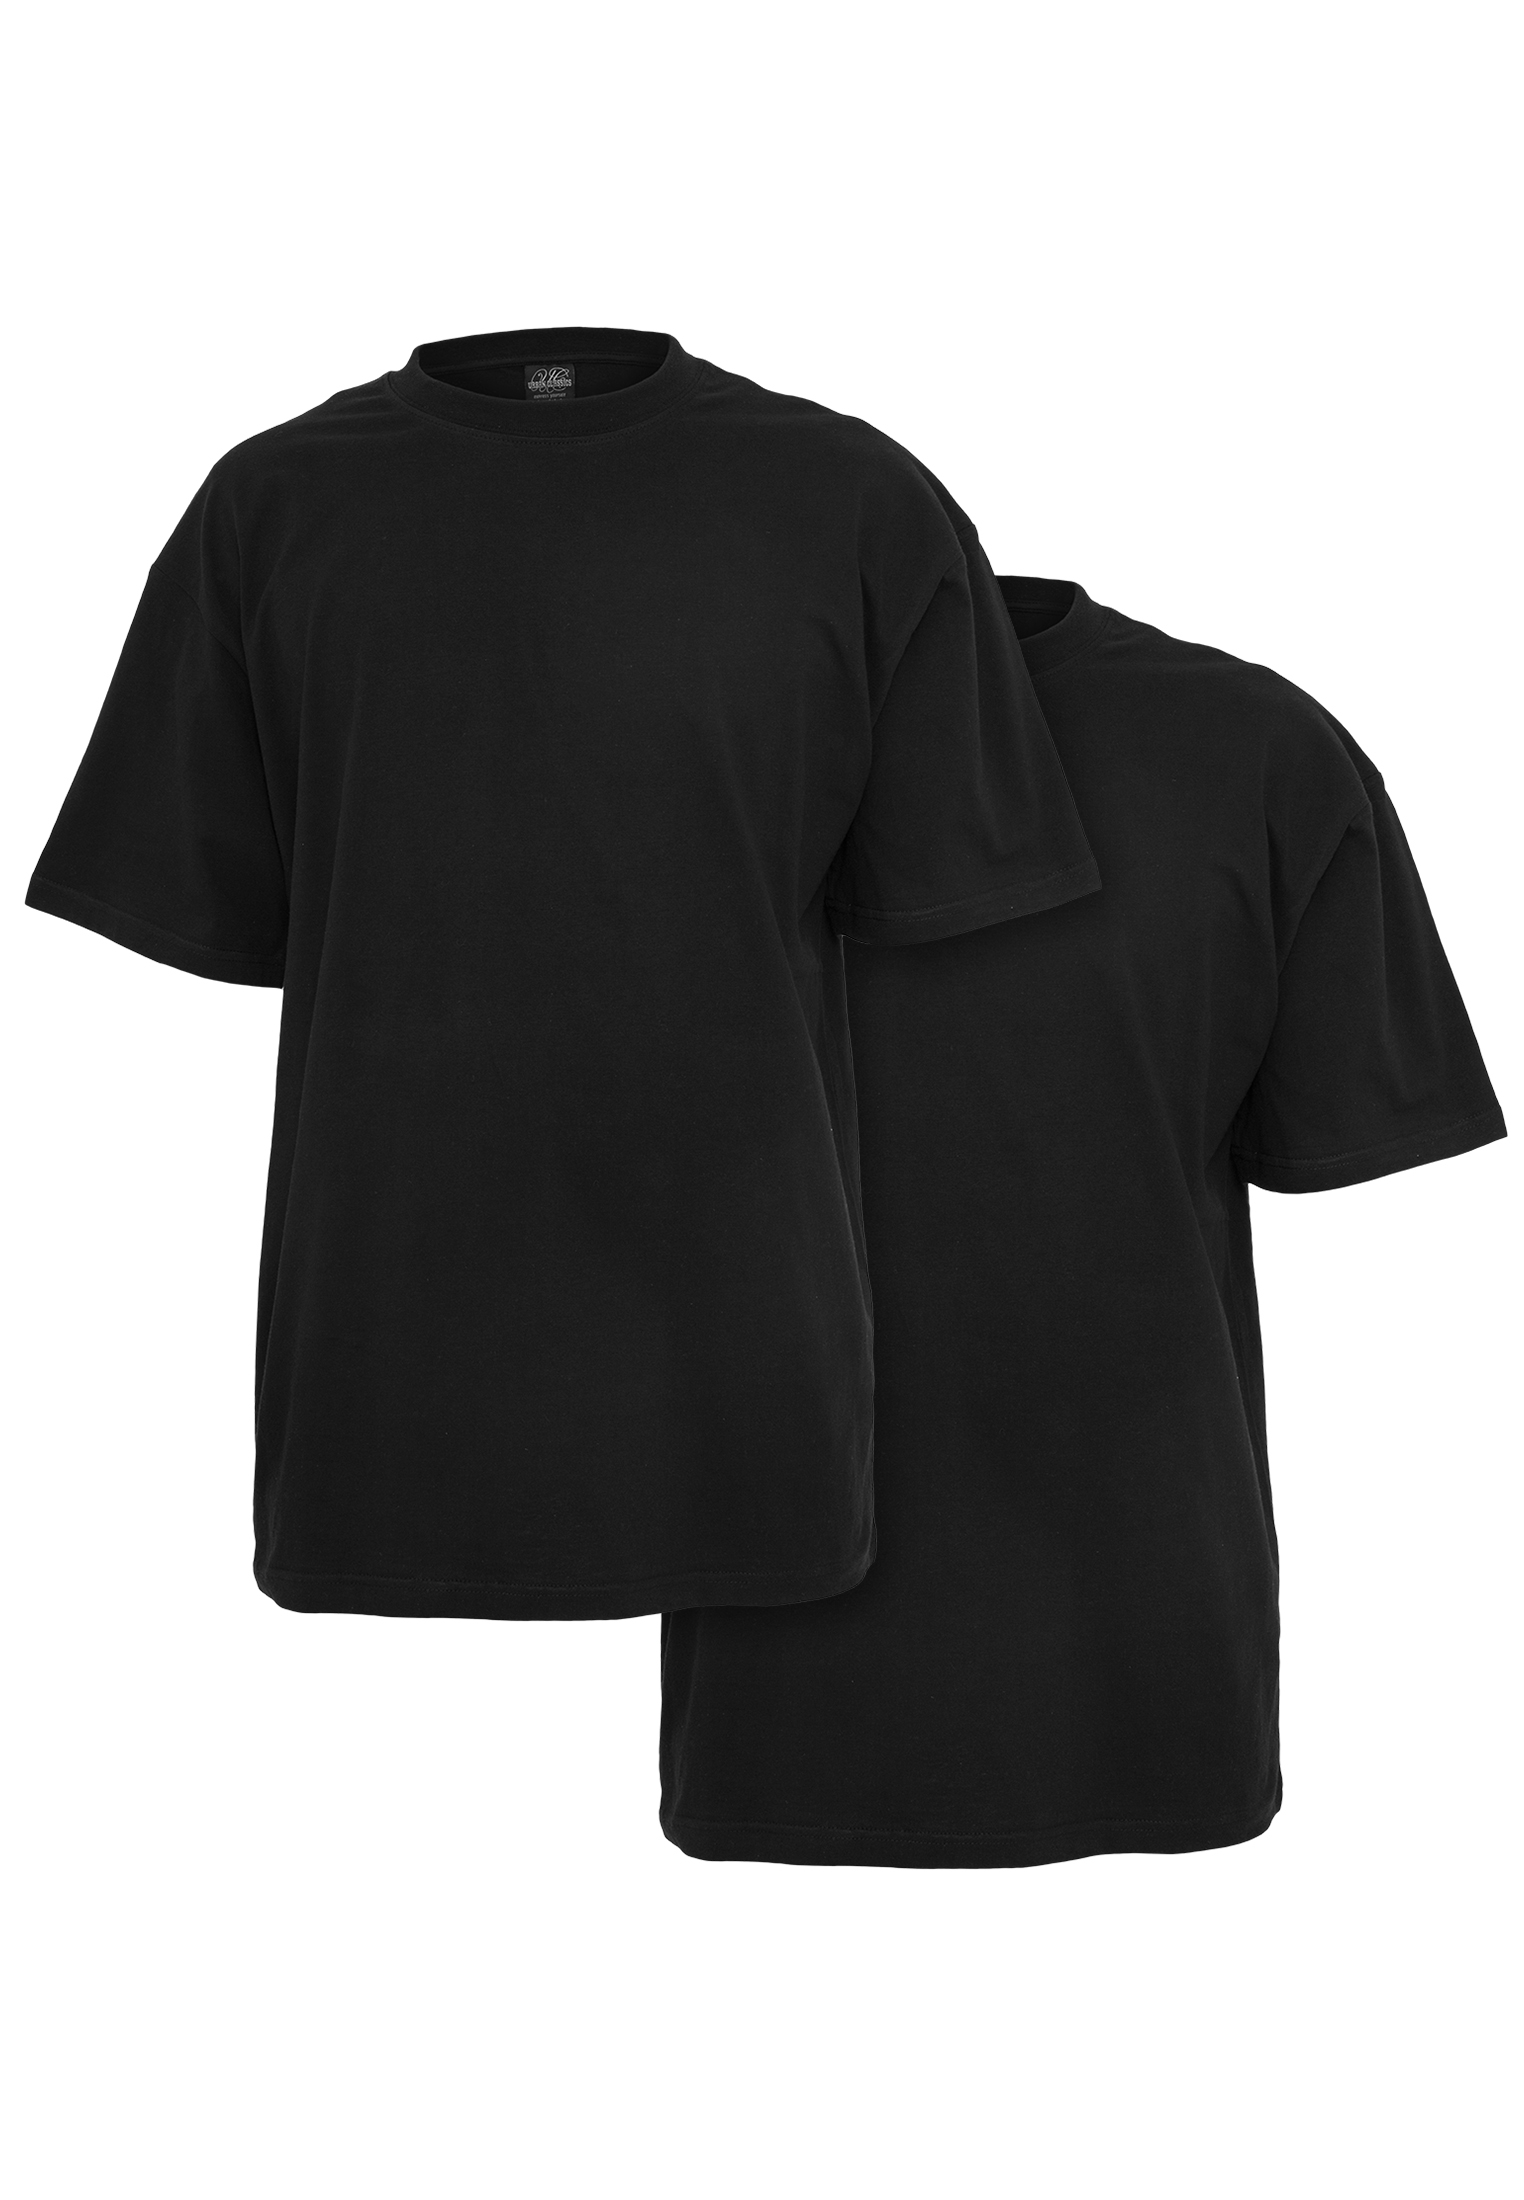 Urban Classics TB366 Herren 3/4 Sleeve Bekleidung T-Shirt